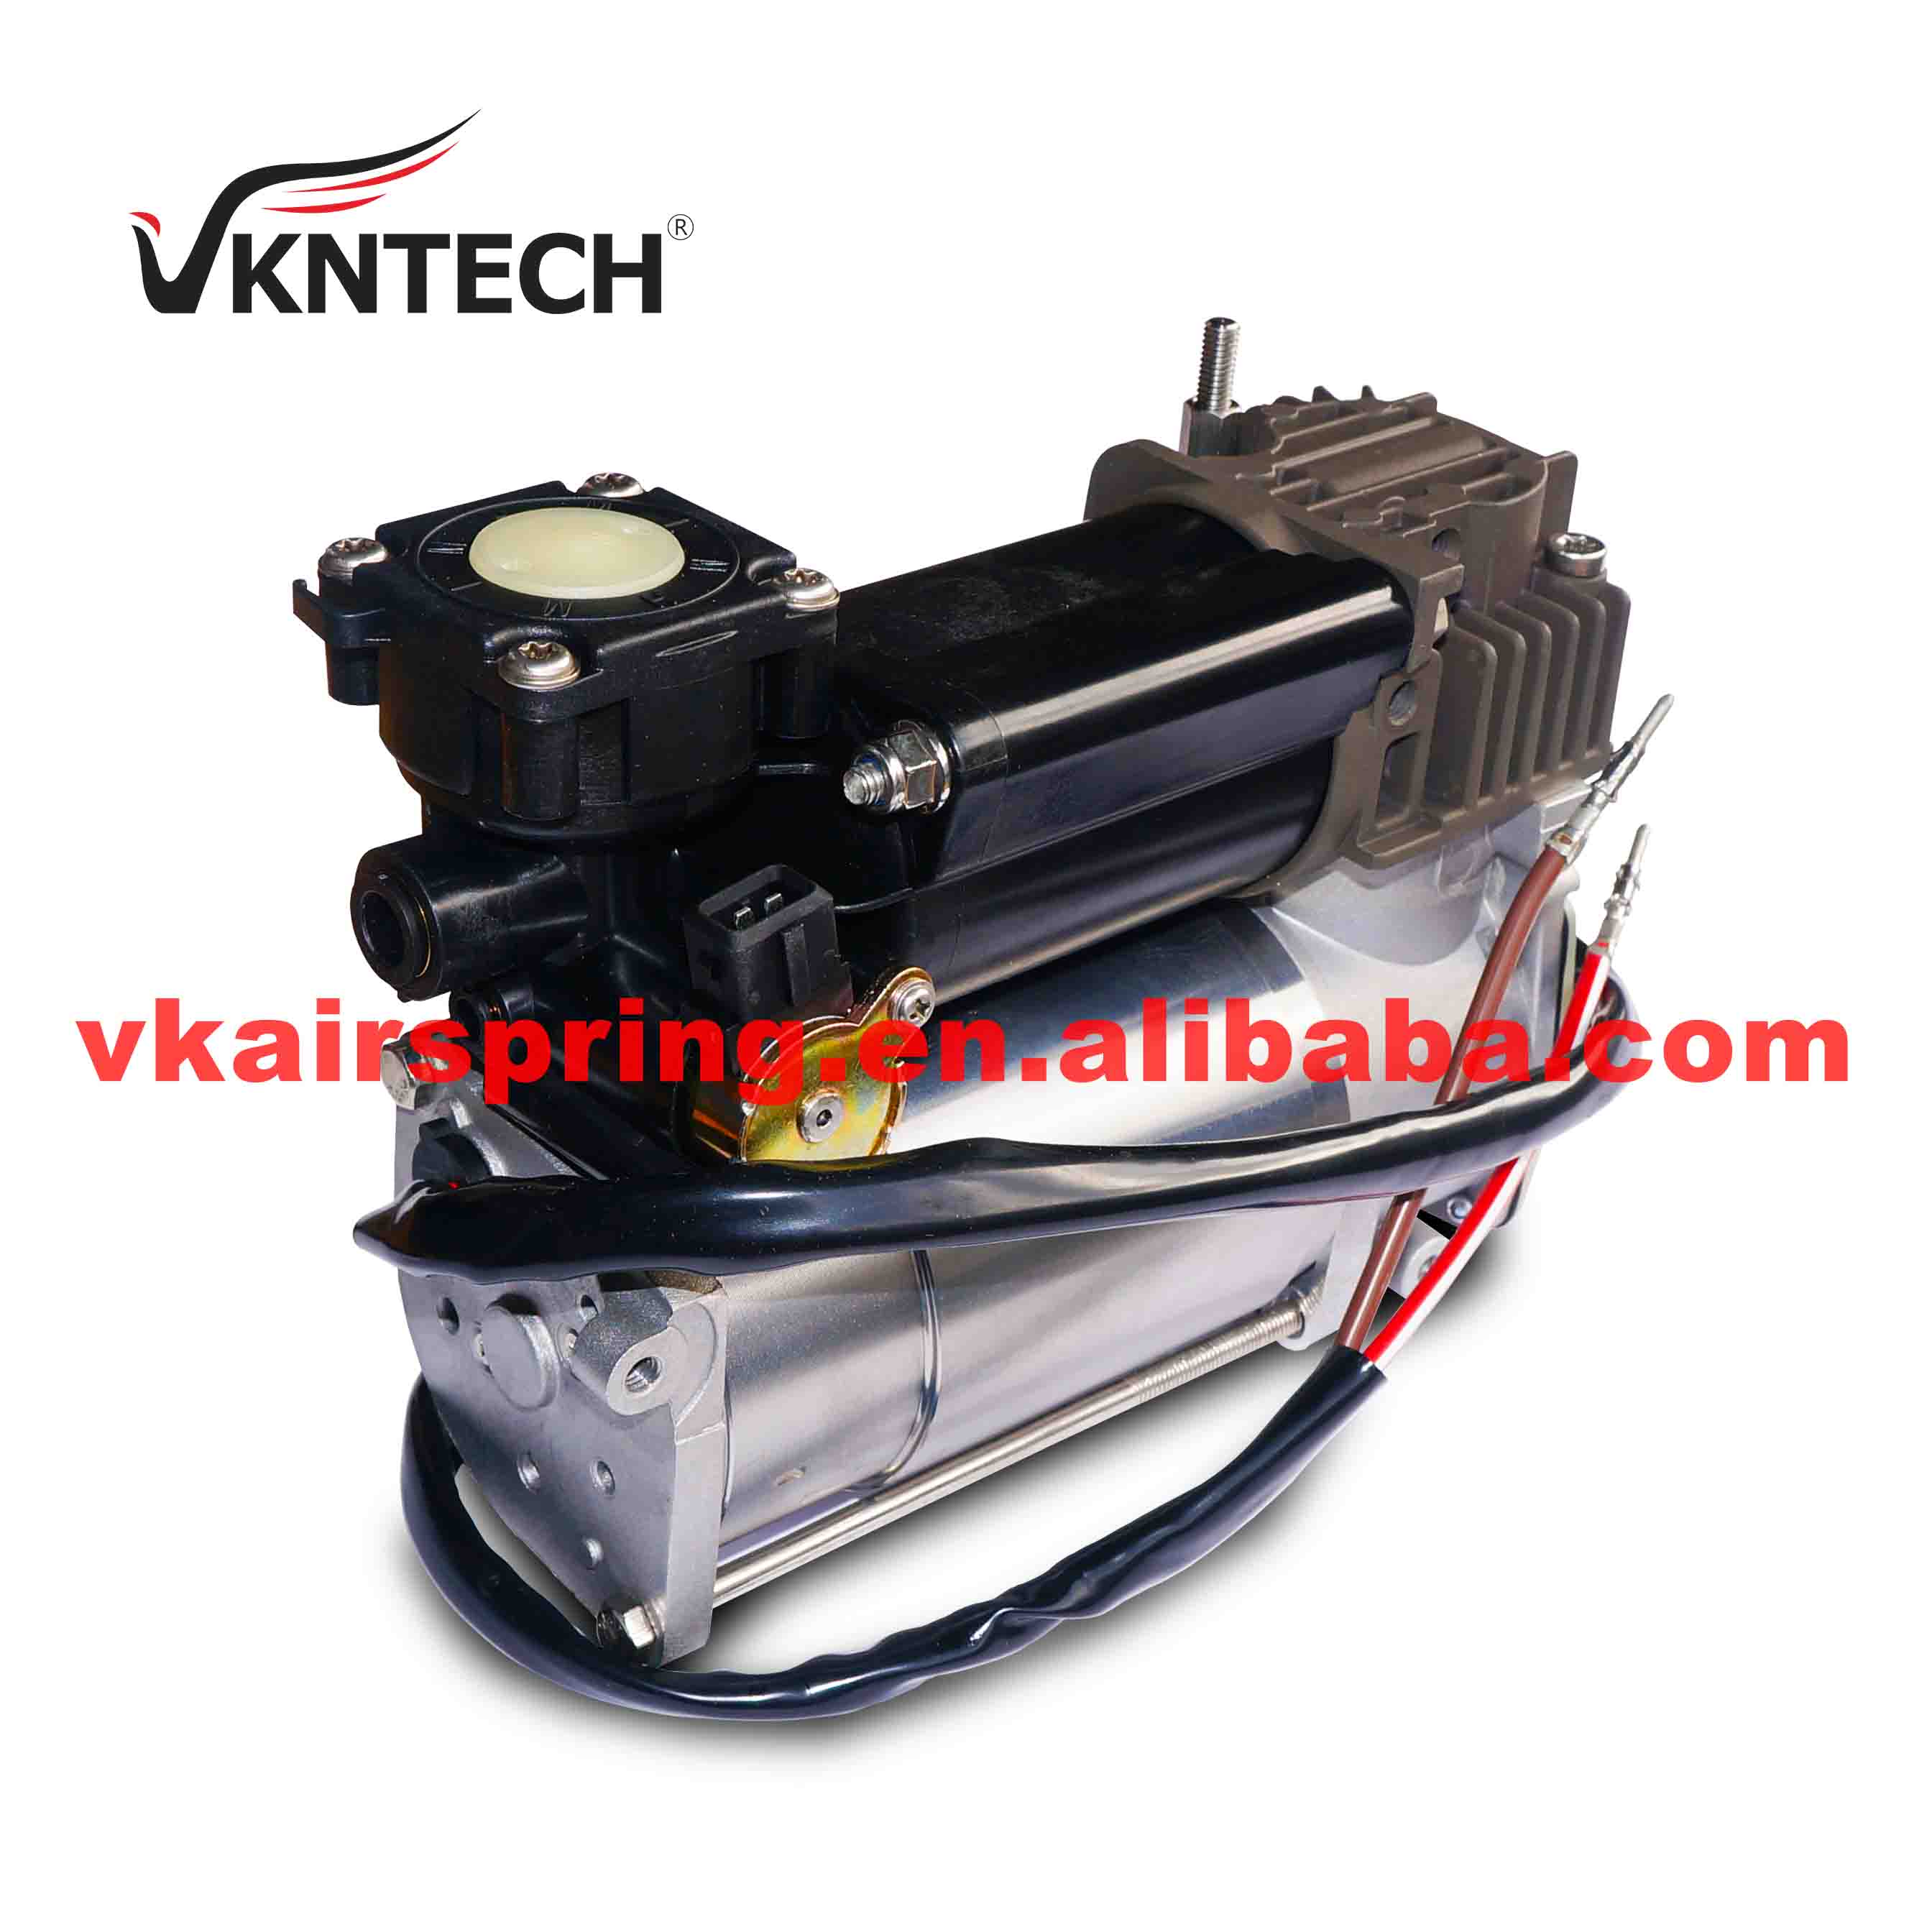 VKNTECH Brand new L322 LR015089 air suspension kit for cars air suspension compressor air compressor for car